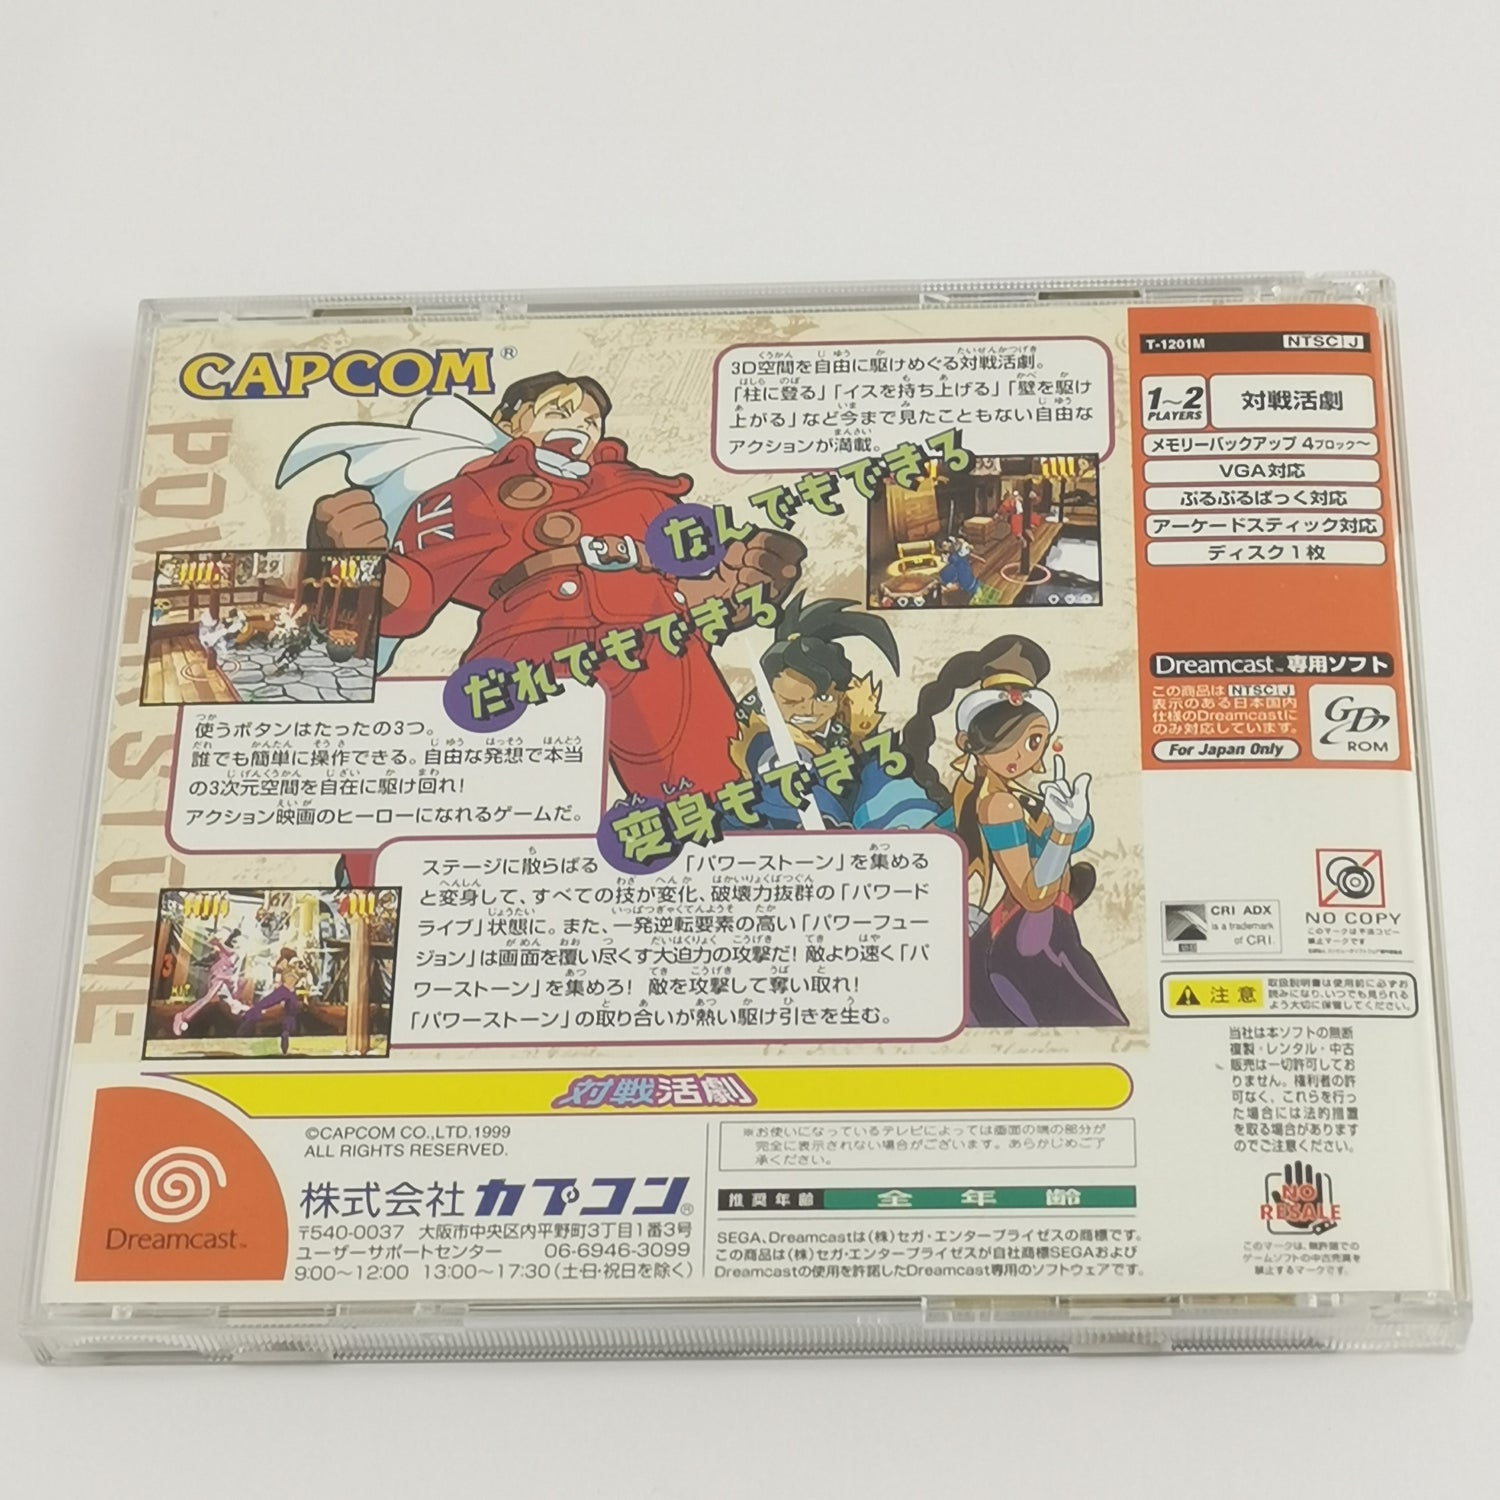 Sega Dreamcast Game: Power Stone | DC original packaging - NTSC-J JAPAN version * very good